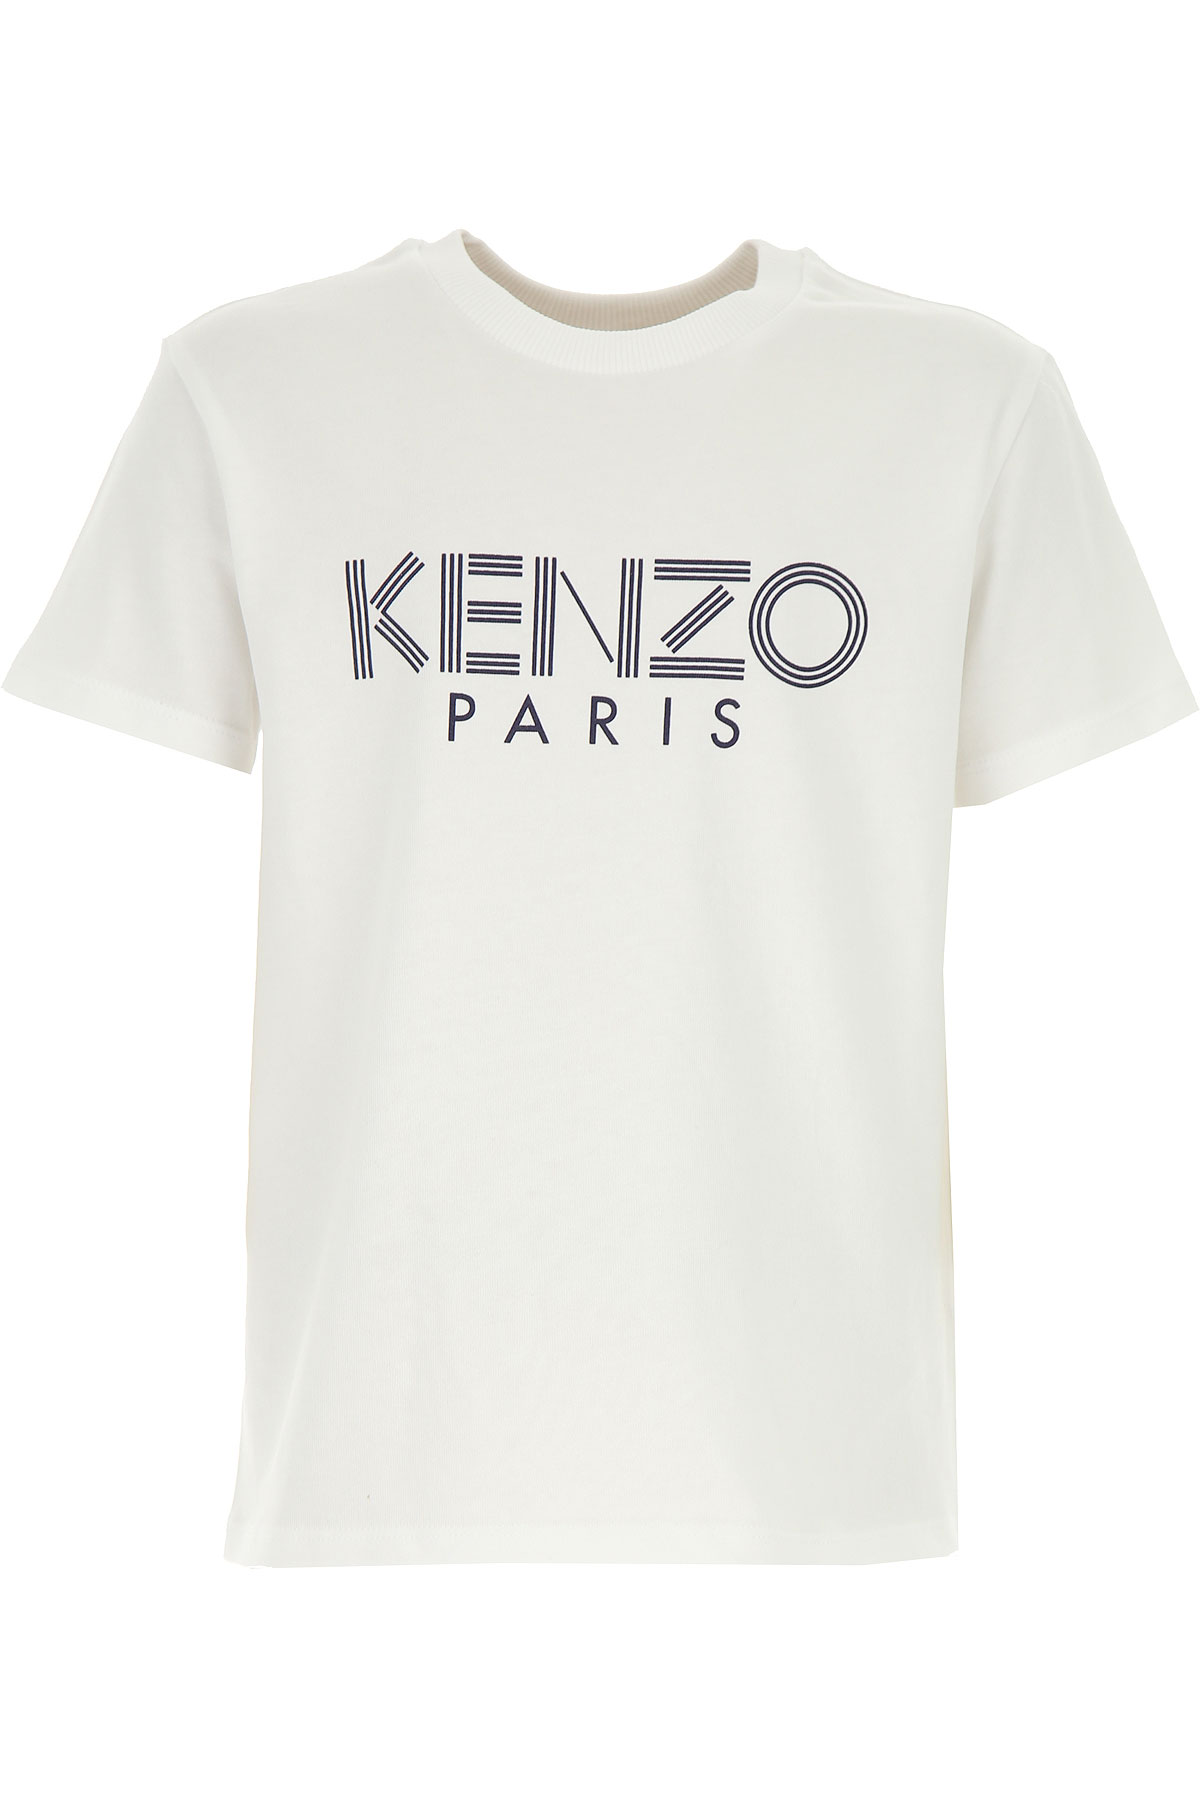 Kenzo Kinder T-Shirt für Jungen Günstig im Sale, Weiss, Baumwolle, 2017, 2Y 3Y 4Y 6Y 8Y